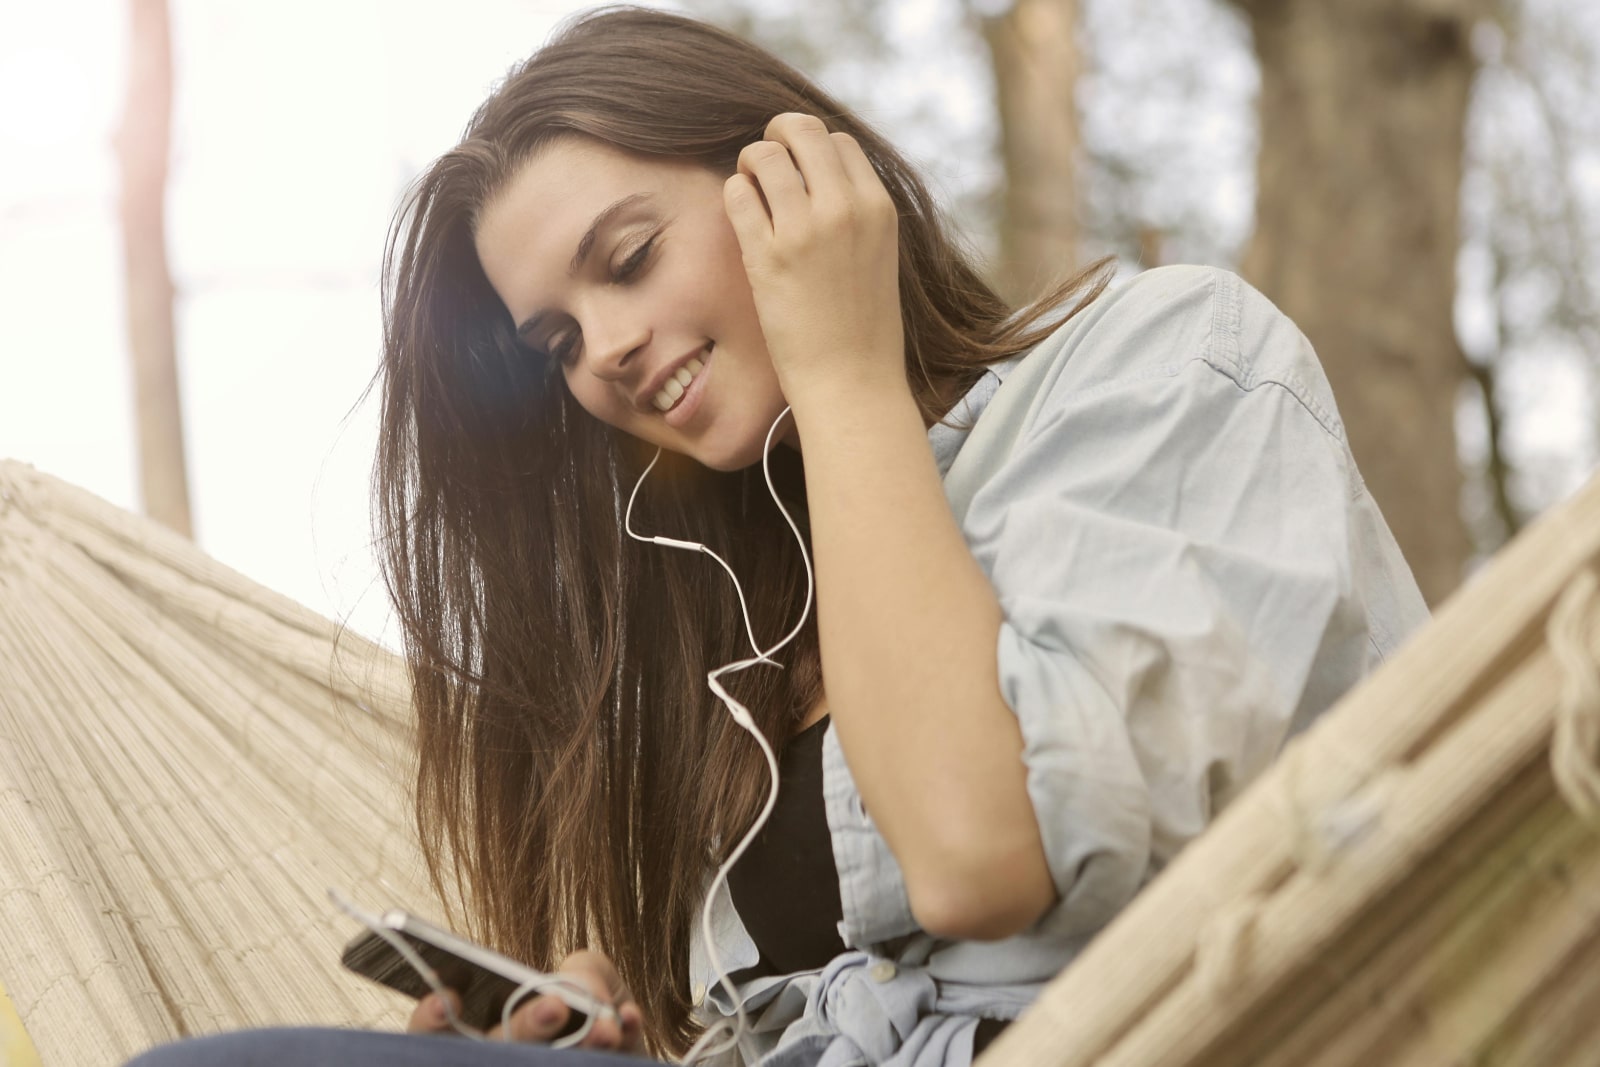 Girl listening to music through earphones